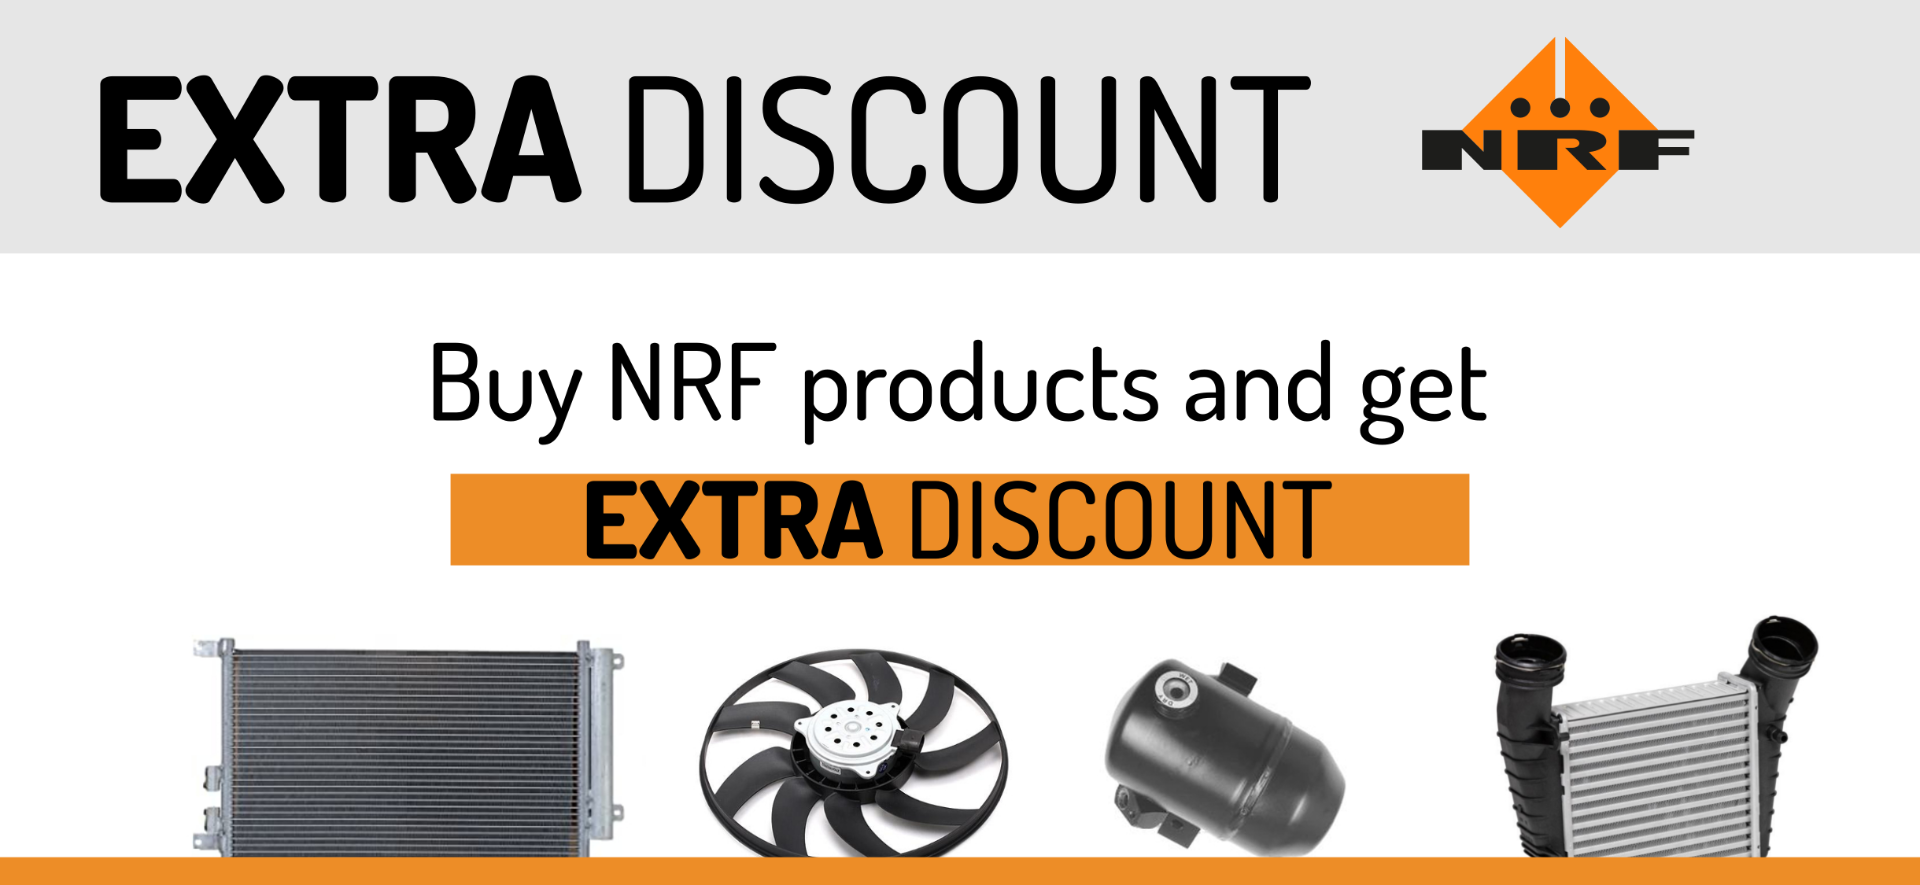 Extra discount NRF spare parts